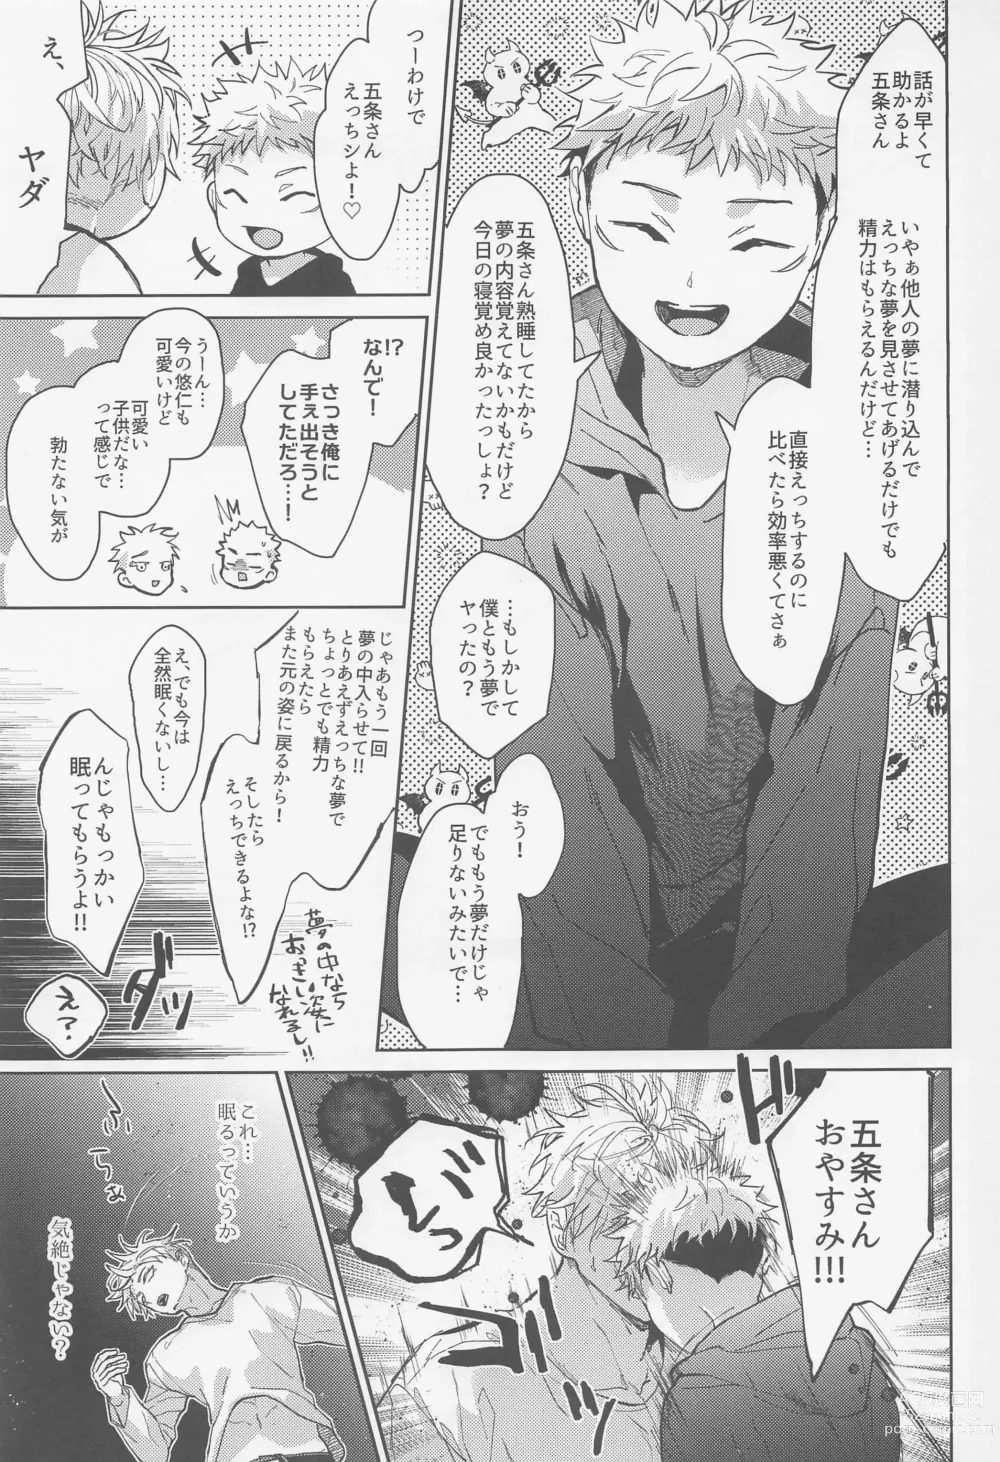 Page 10 of doujinshi Inma Shiiku